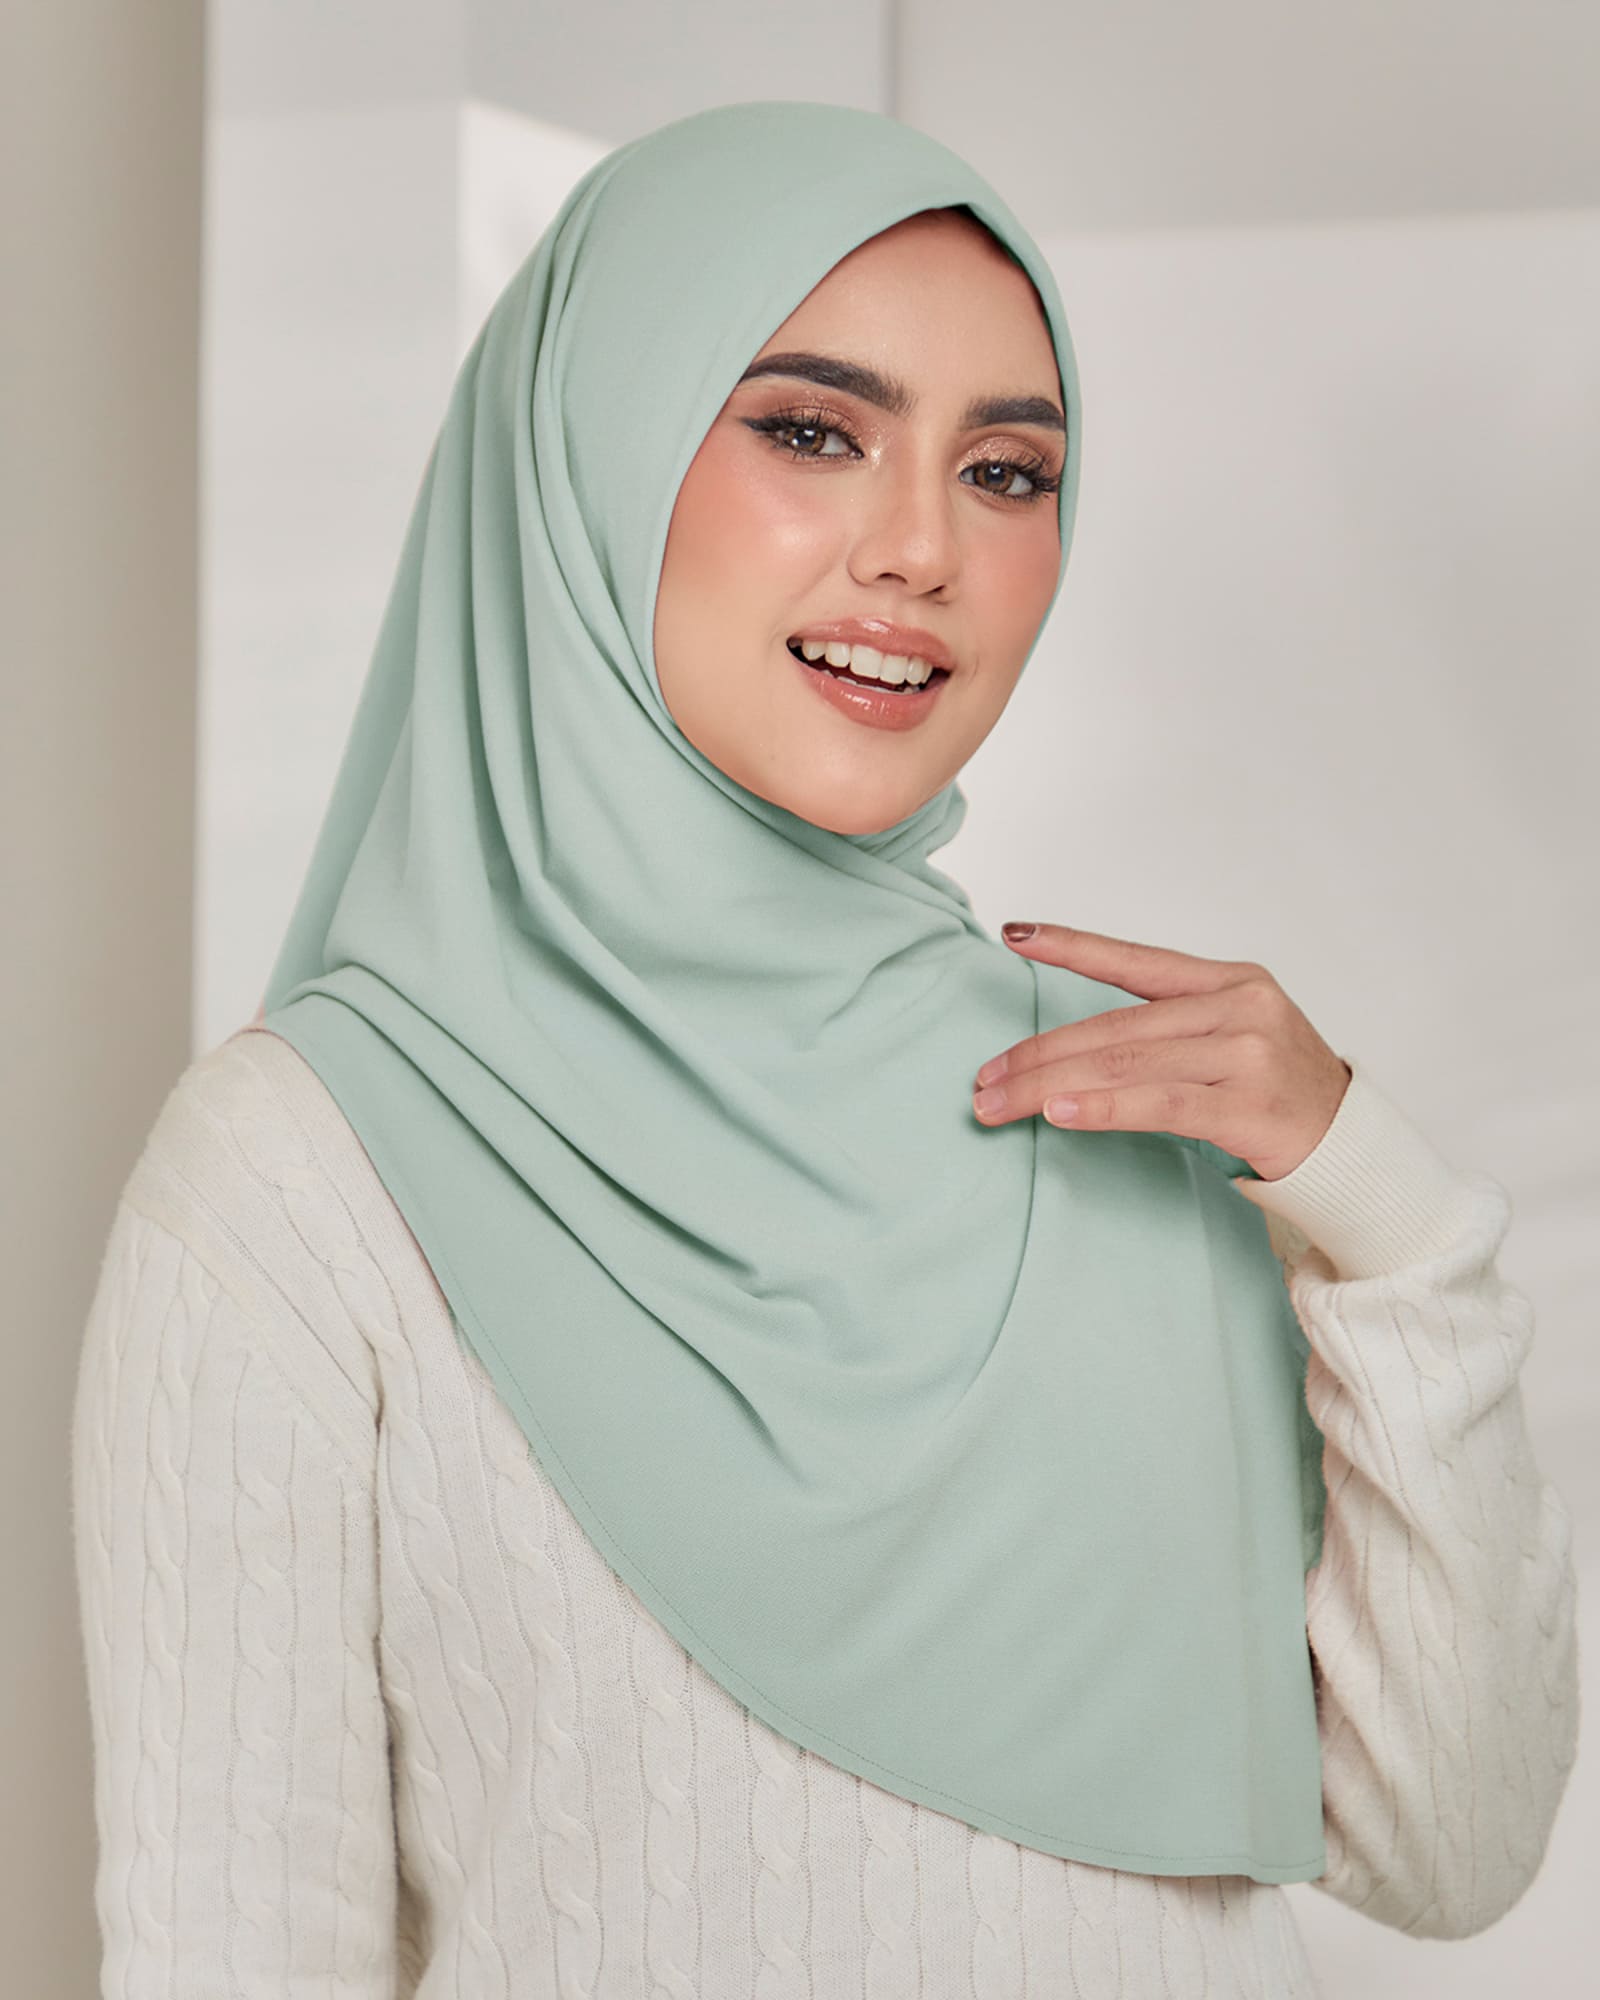 Lazy Sarong Instant Hijab in Aqua